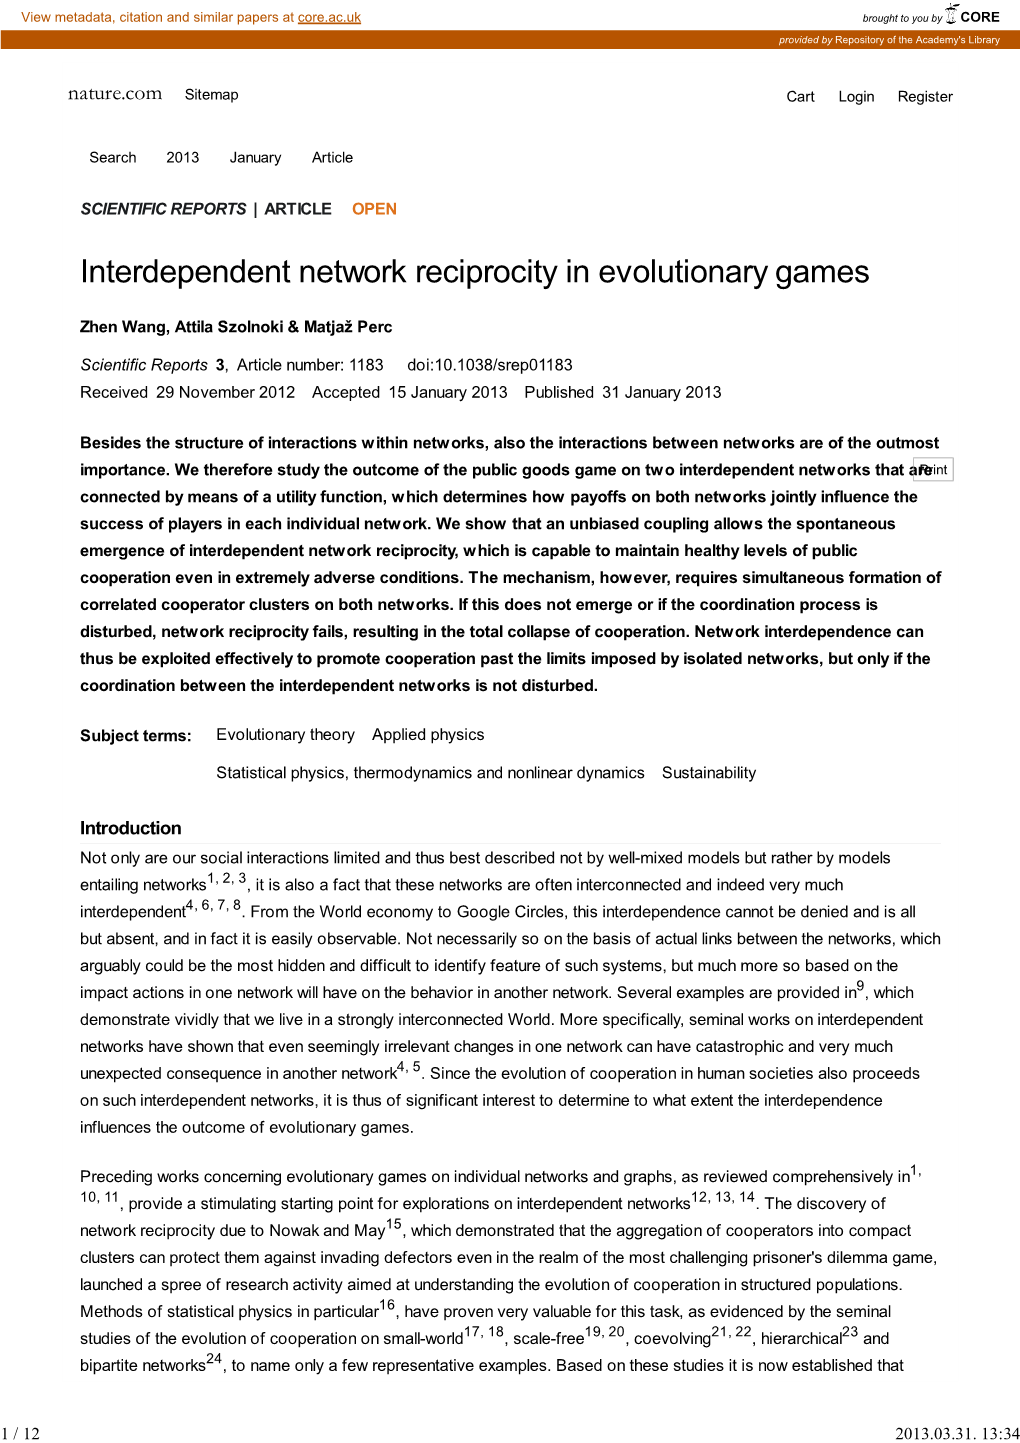 Interdependent Network Reciprocity in Evolutionary Games : Scientific R